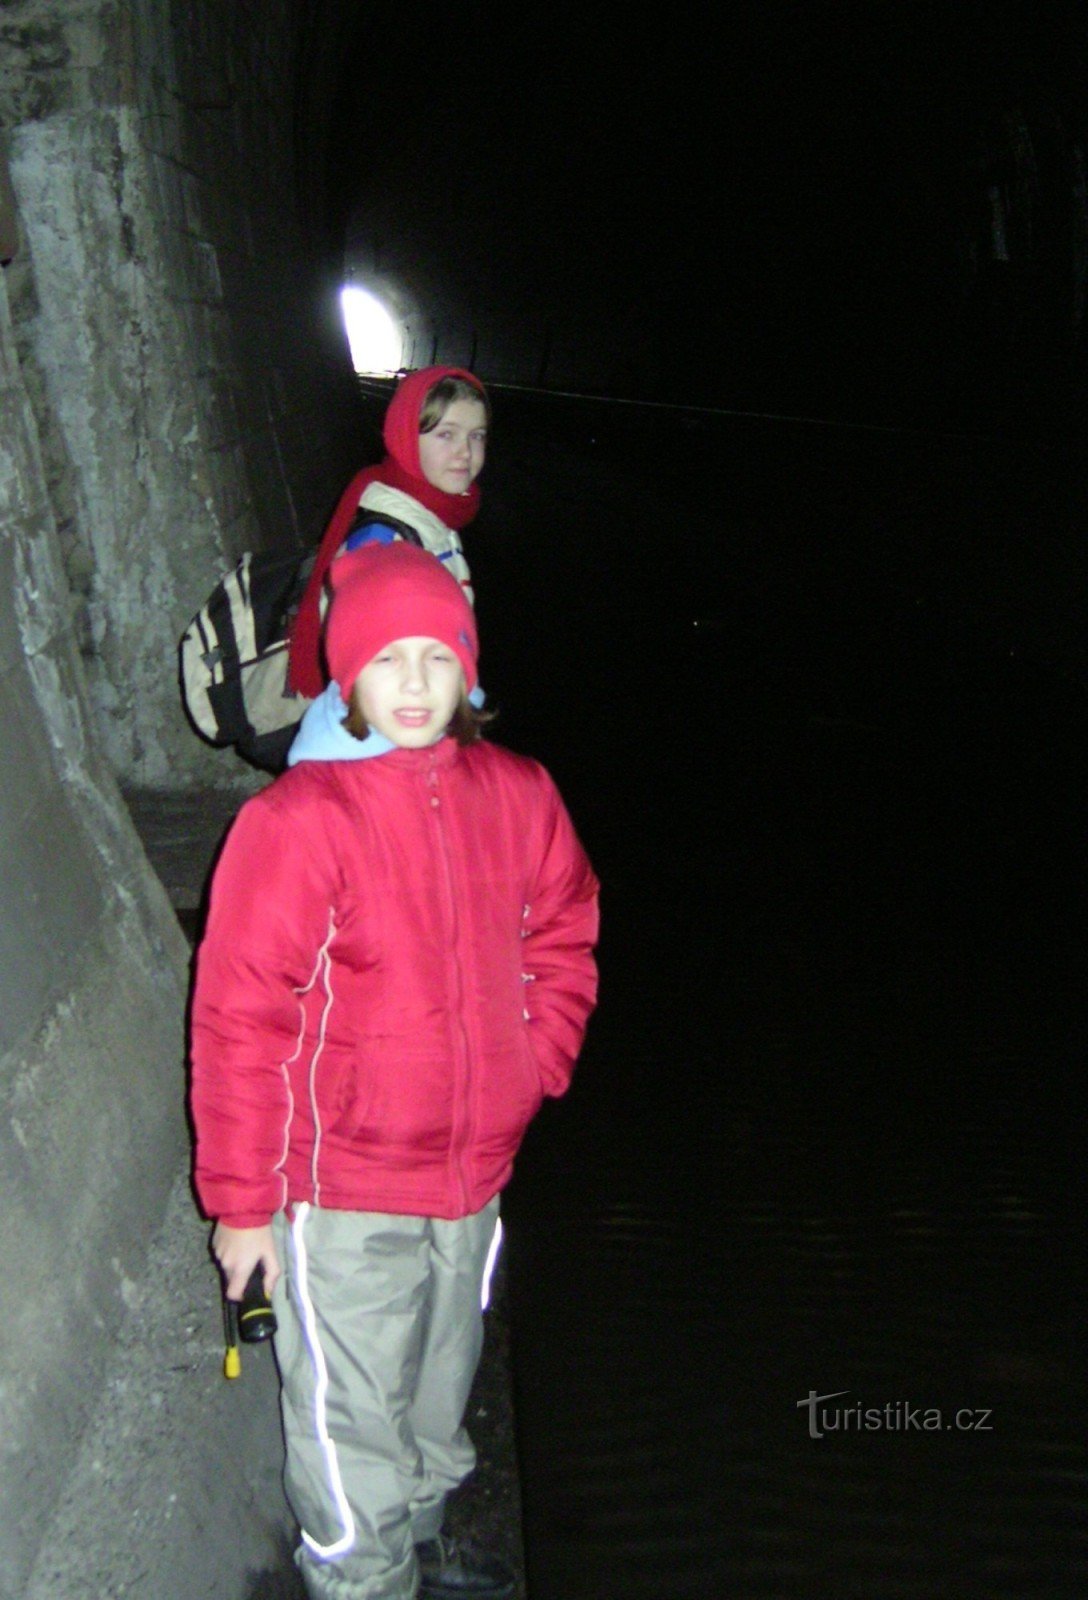 Malá Chuchle - en mørk sti gennem en jernbanetunnel